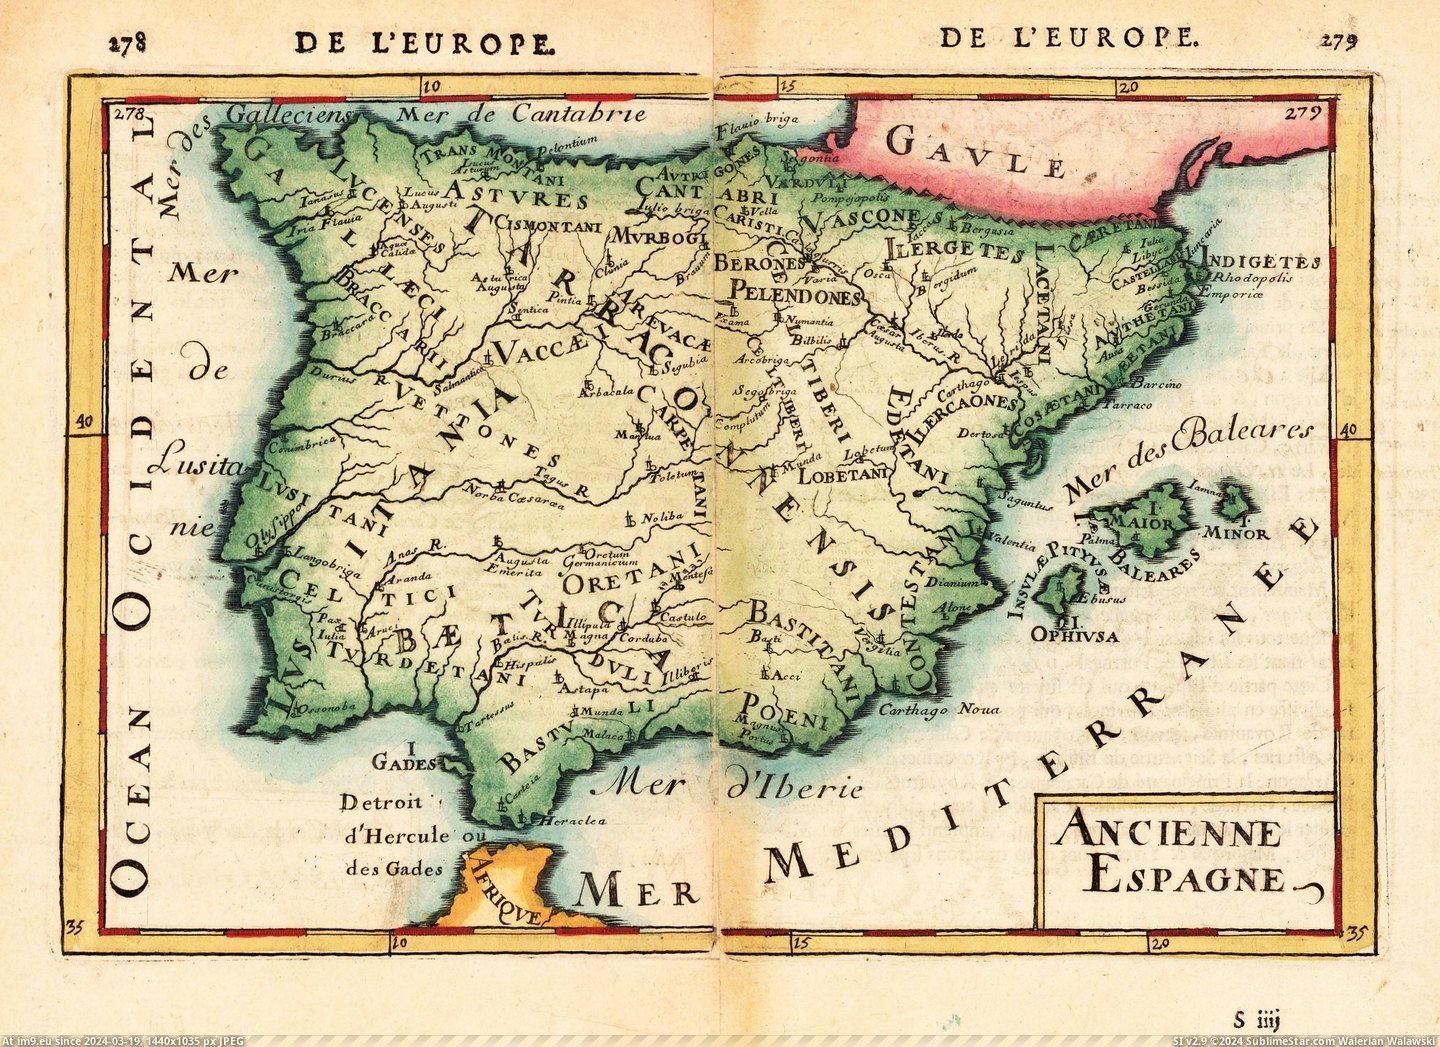 #Ancienne  #Espagne [Mapporn] Ancienne Espagne (1719) [2349×1700] Pic. (Image of album My r/MAPS favs))